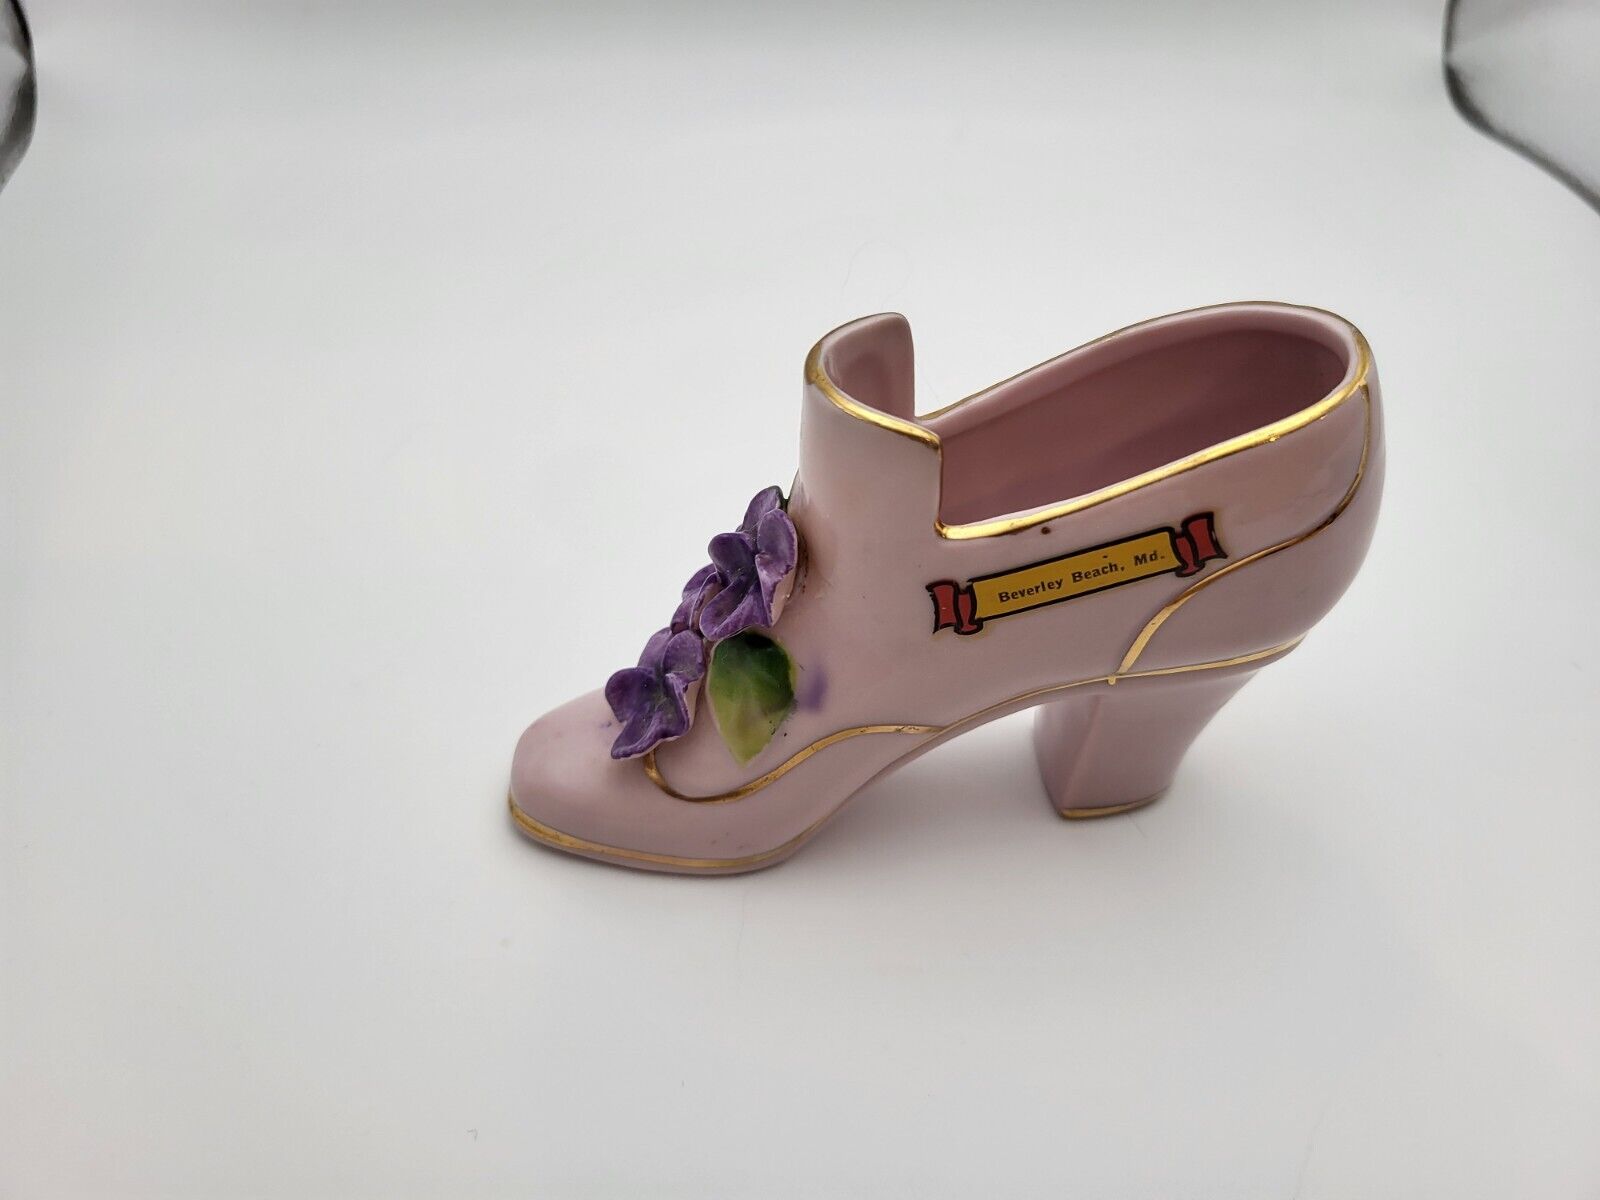 Vtge Ceramic Miniature High Heel Shoe Soveigner Beverley Beach MD Victorian Pink